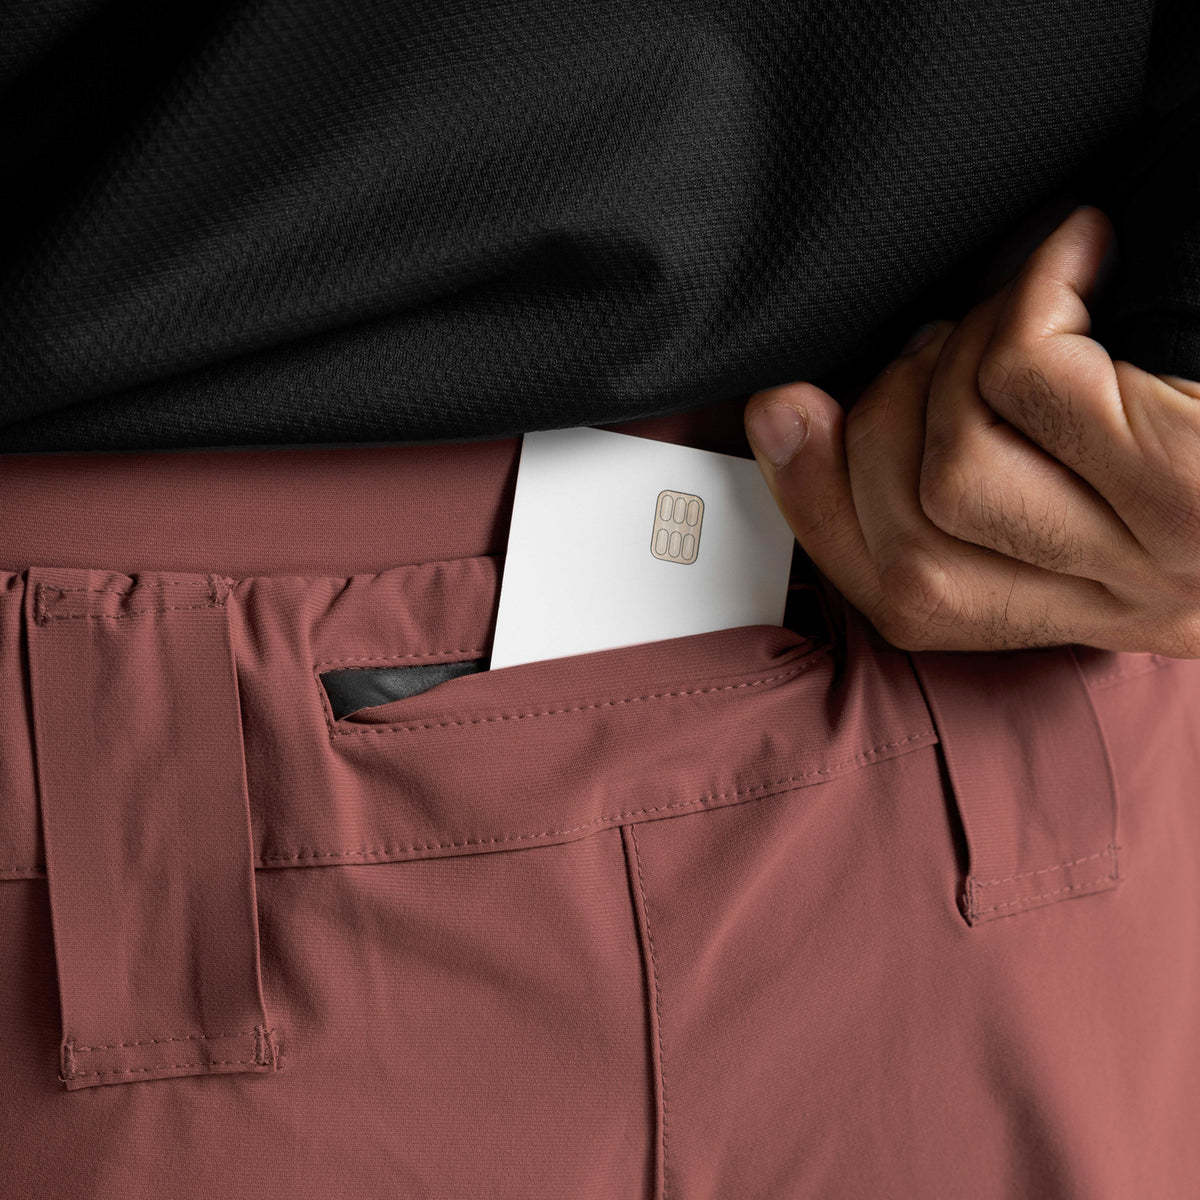 150g Woven Thin Multi-functional Quick-drying Men's Shorts